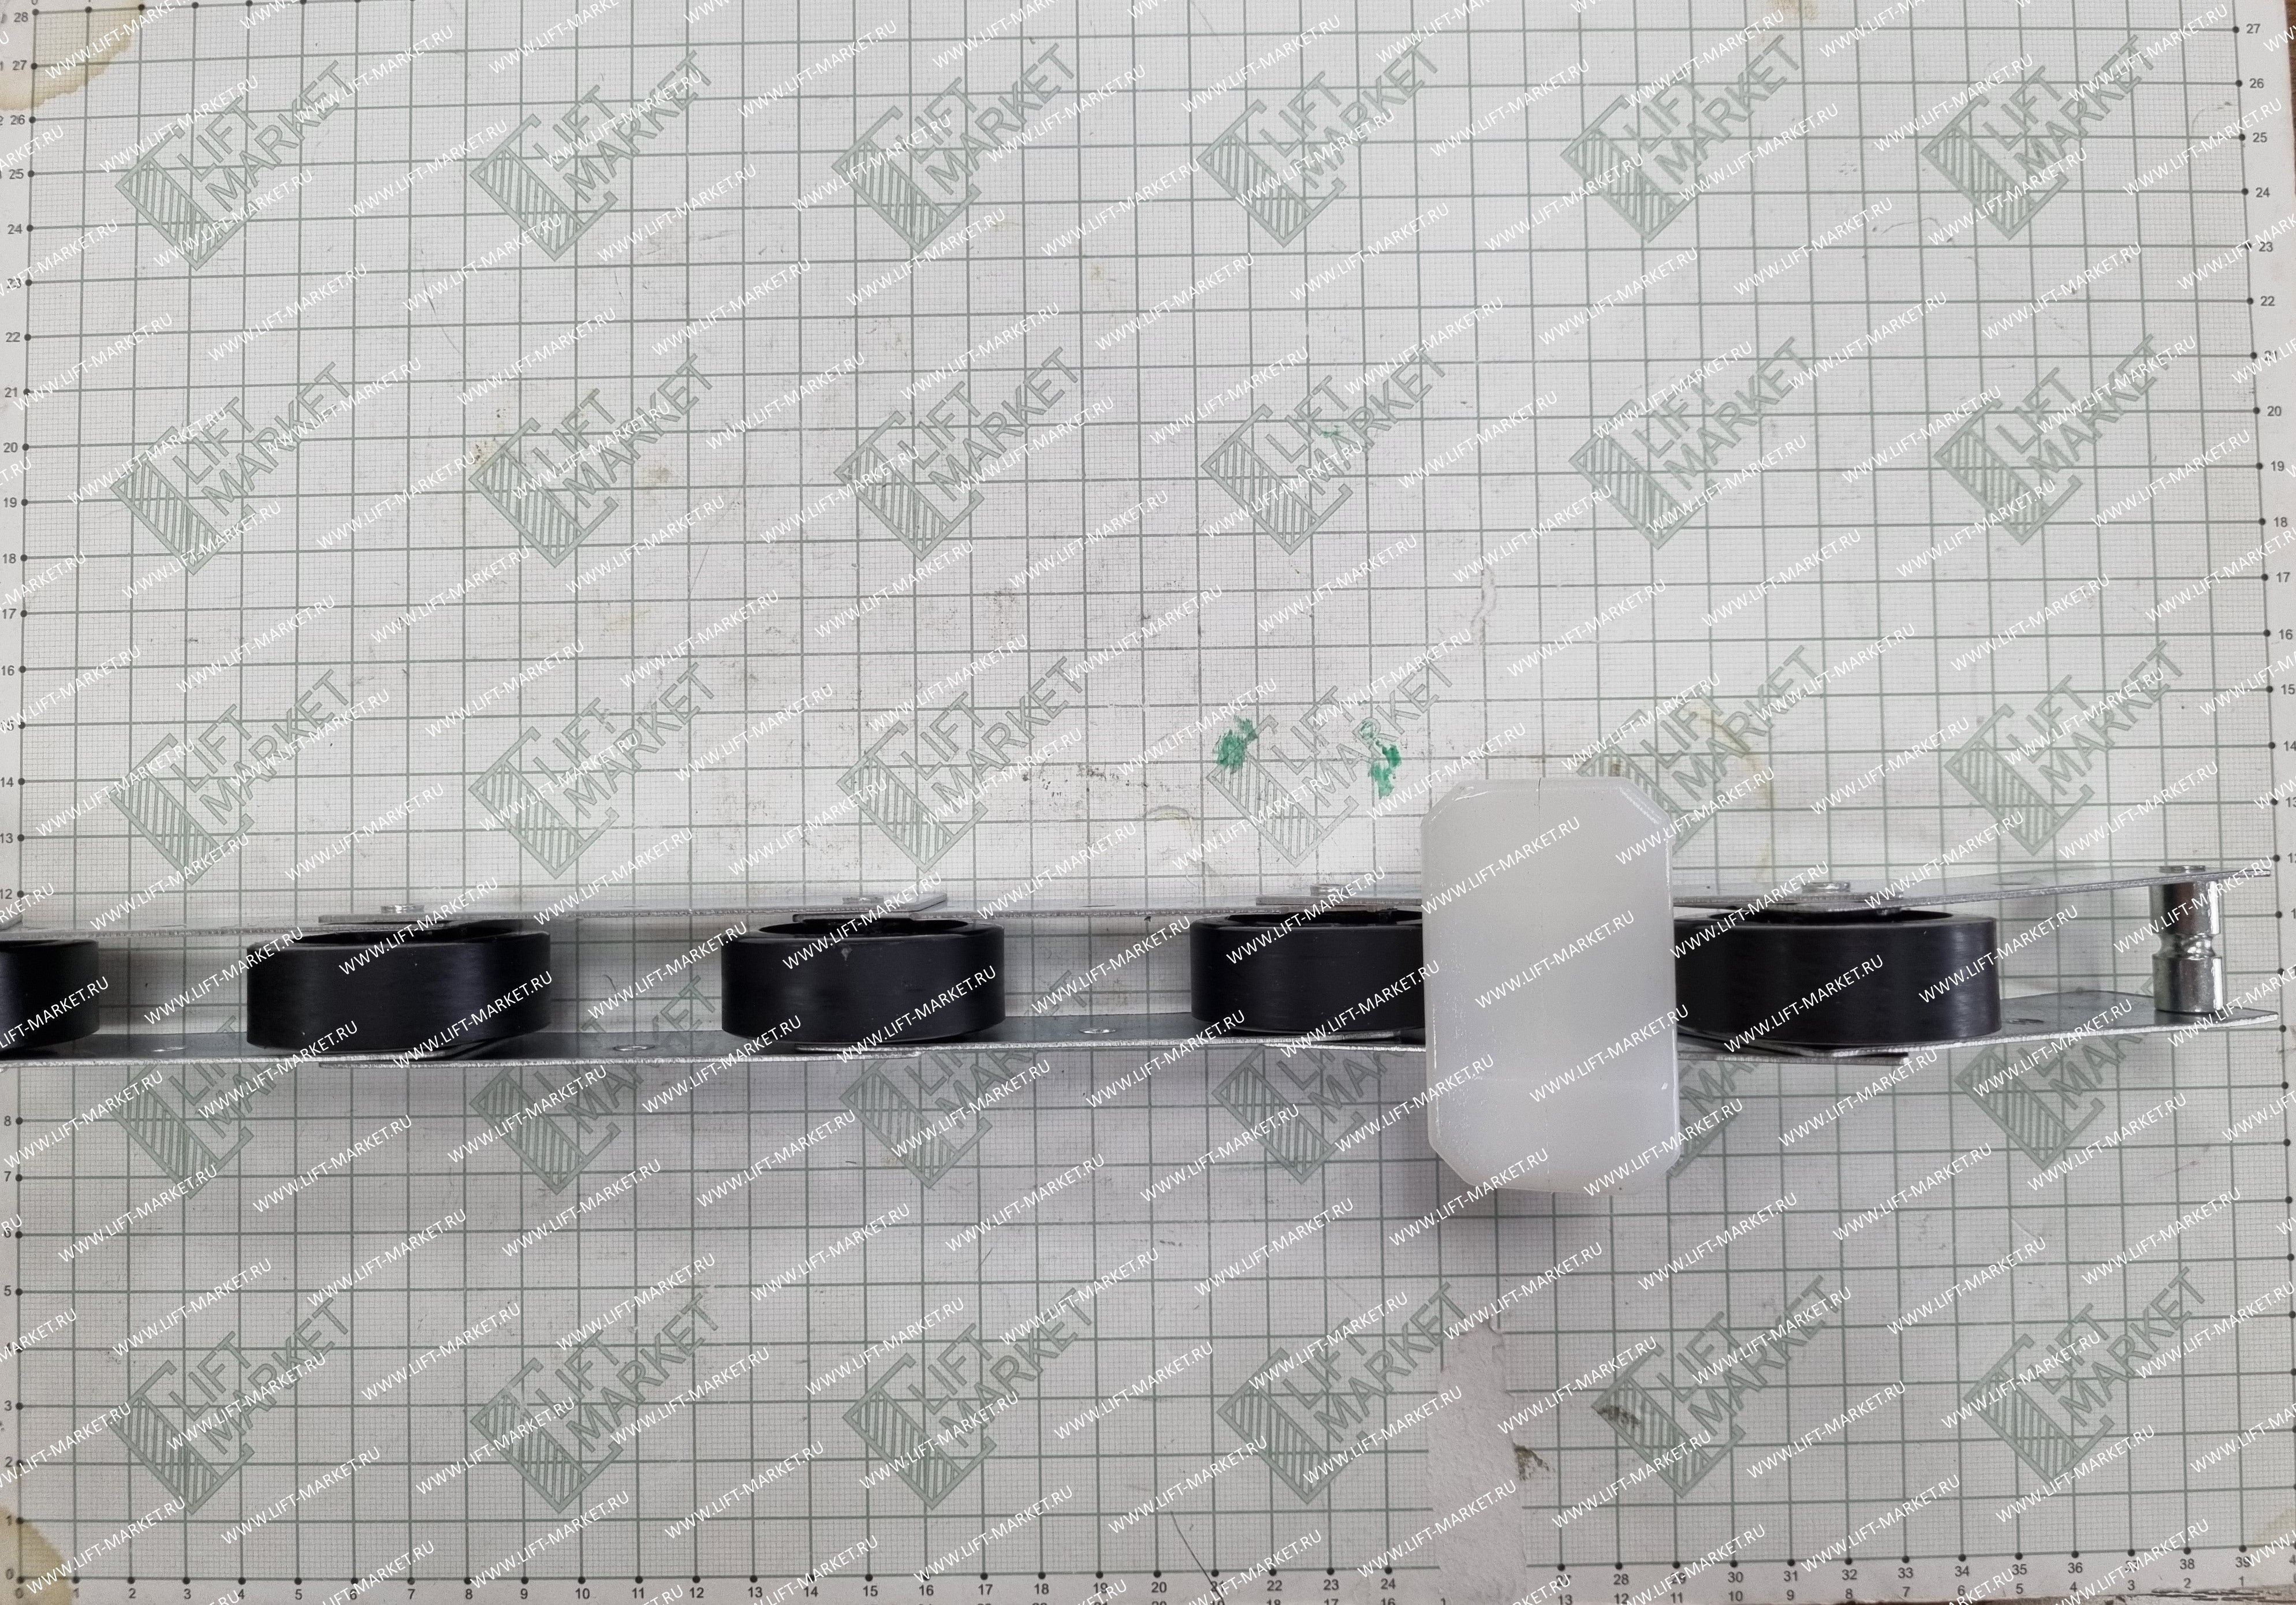 Отклоняющая цепь балюстрады, однорядная (15 роликов), шаг 75мм, диаметр ролика 46мм BLT XIZI OTIS фото